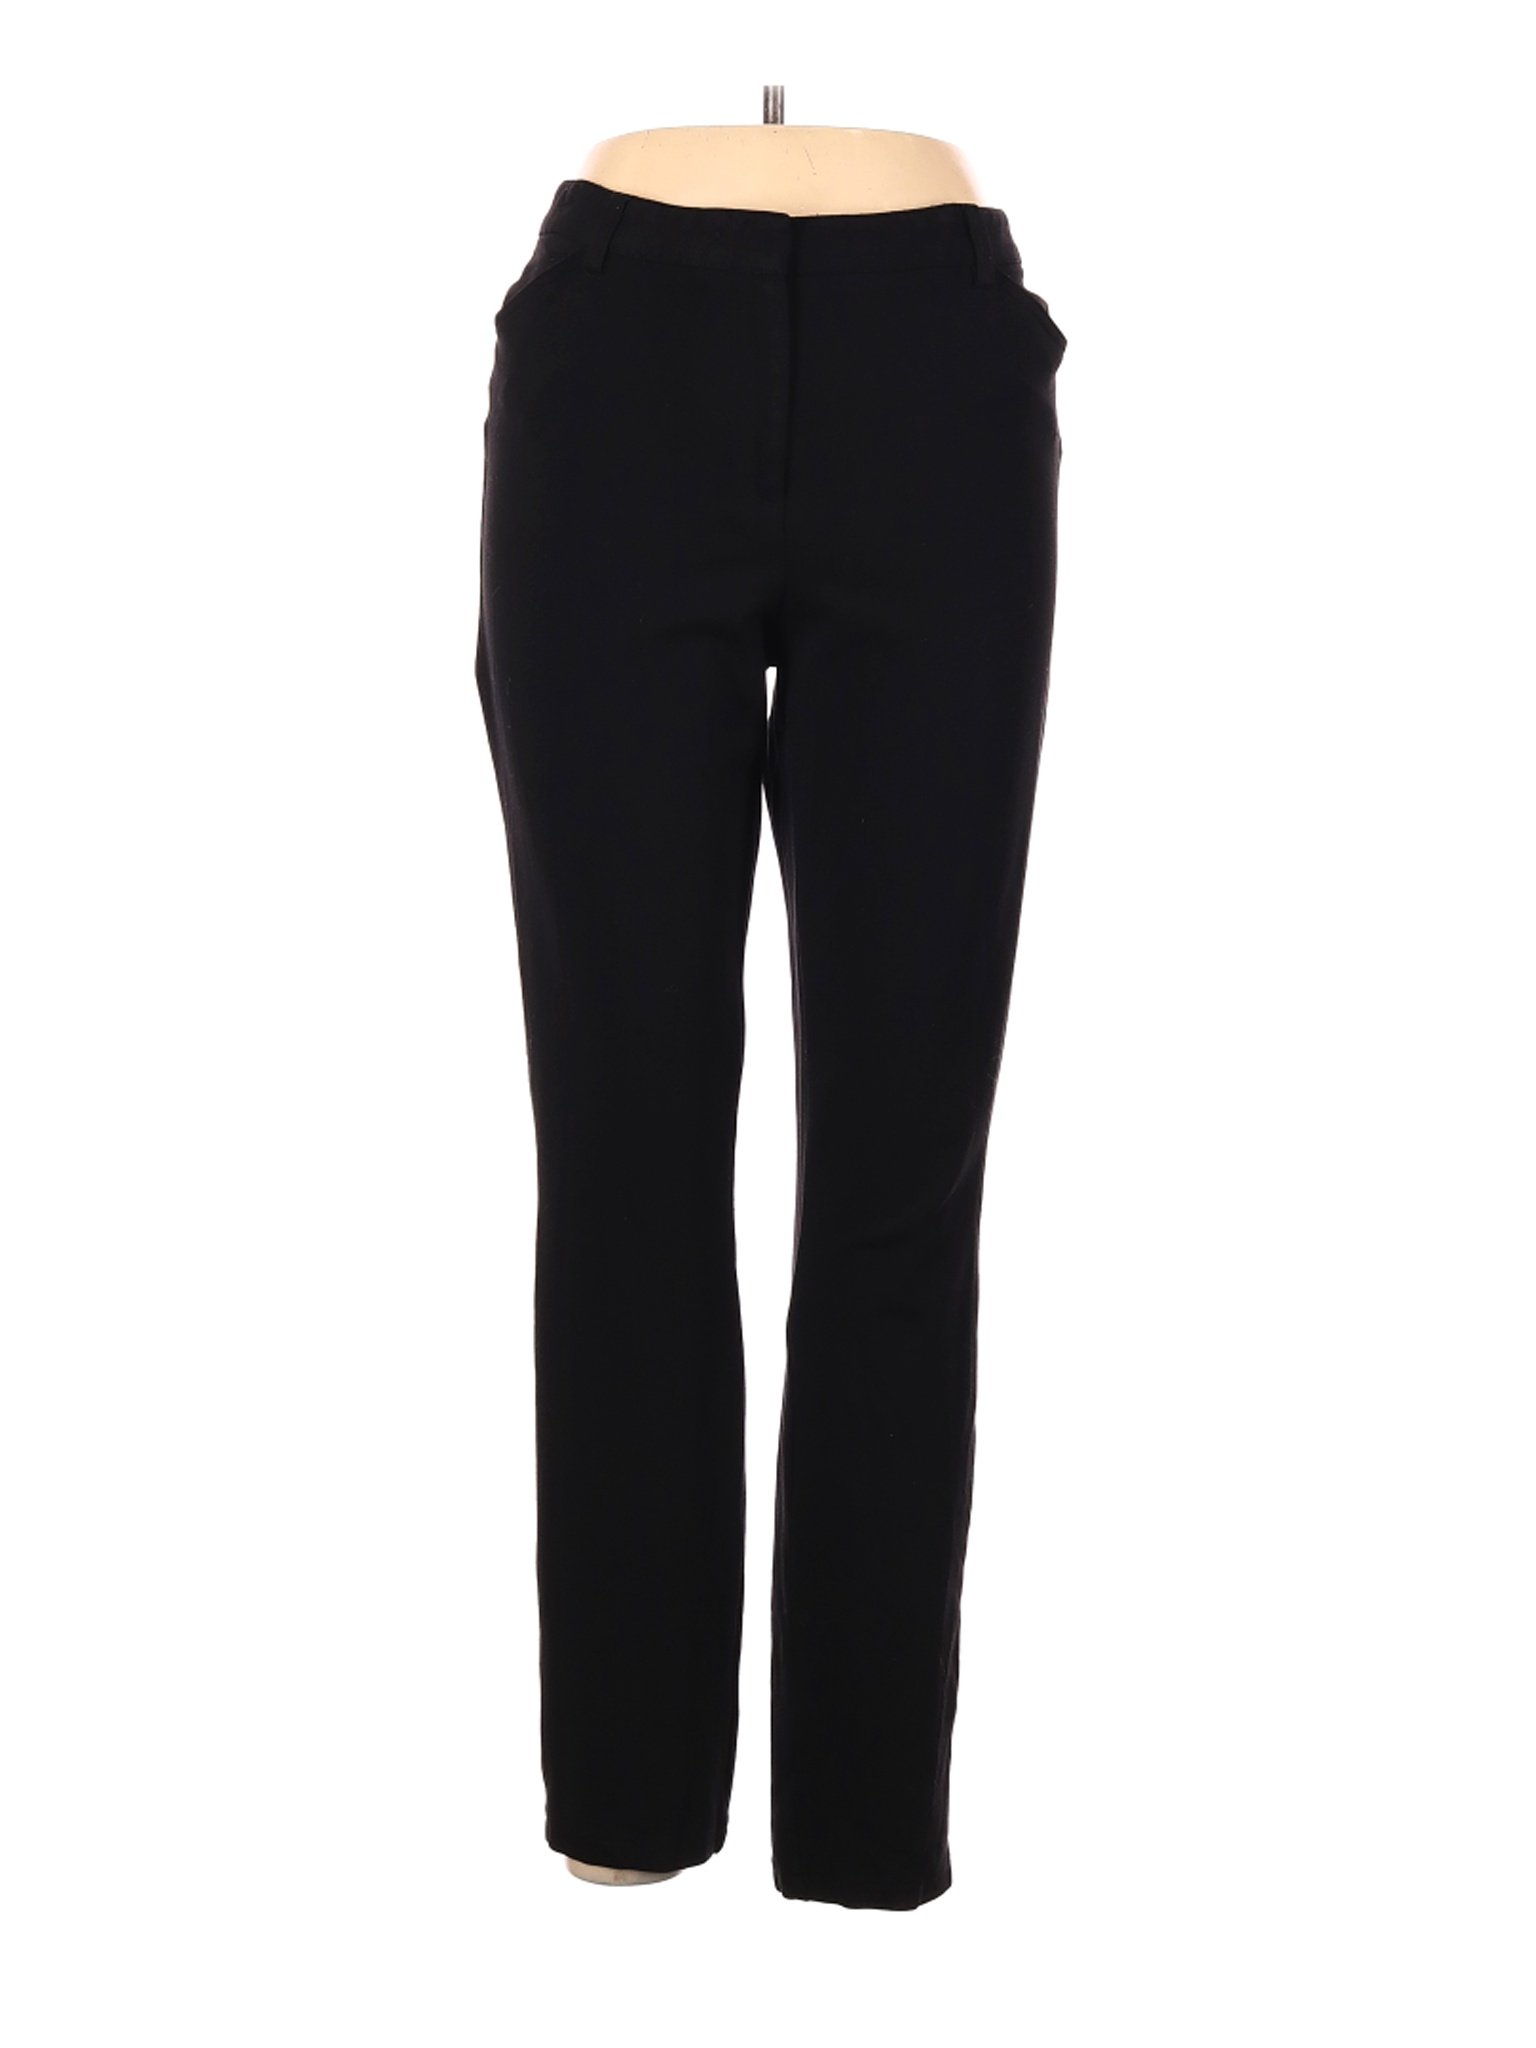 Andrew Marc Women Black Casual Pants 14 | eBay